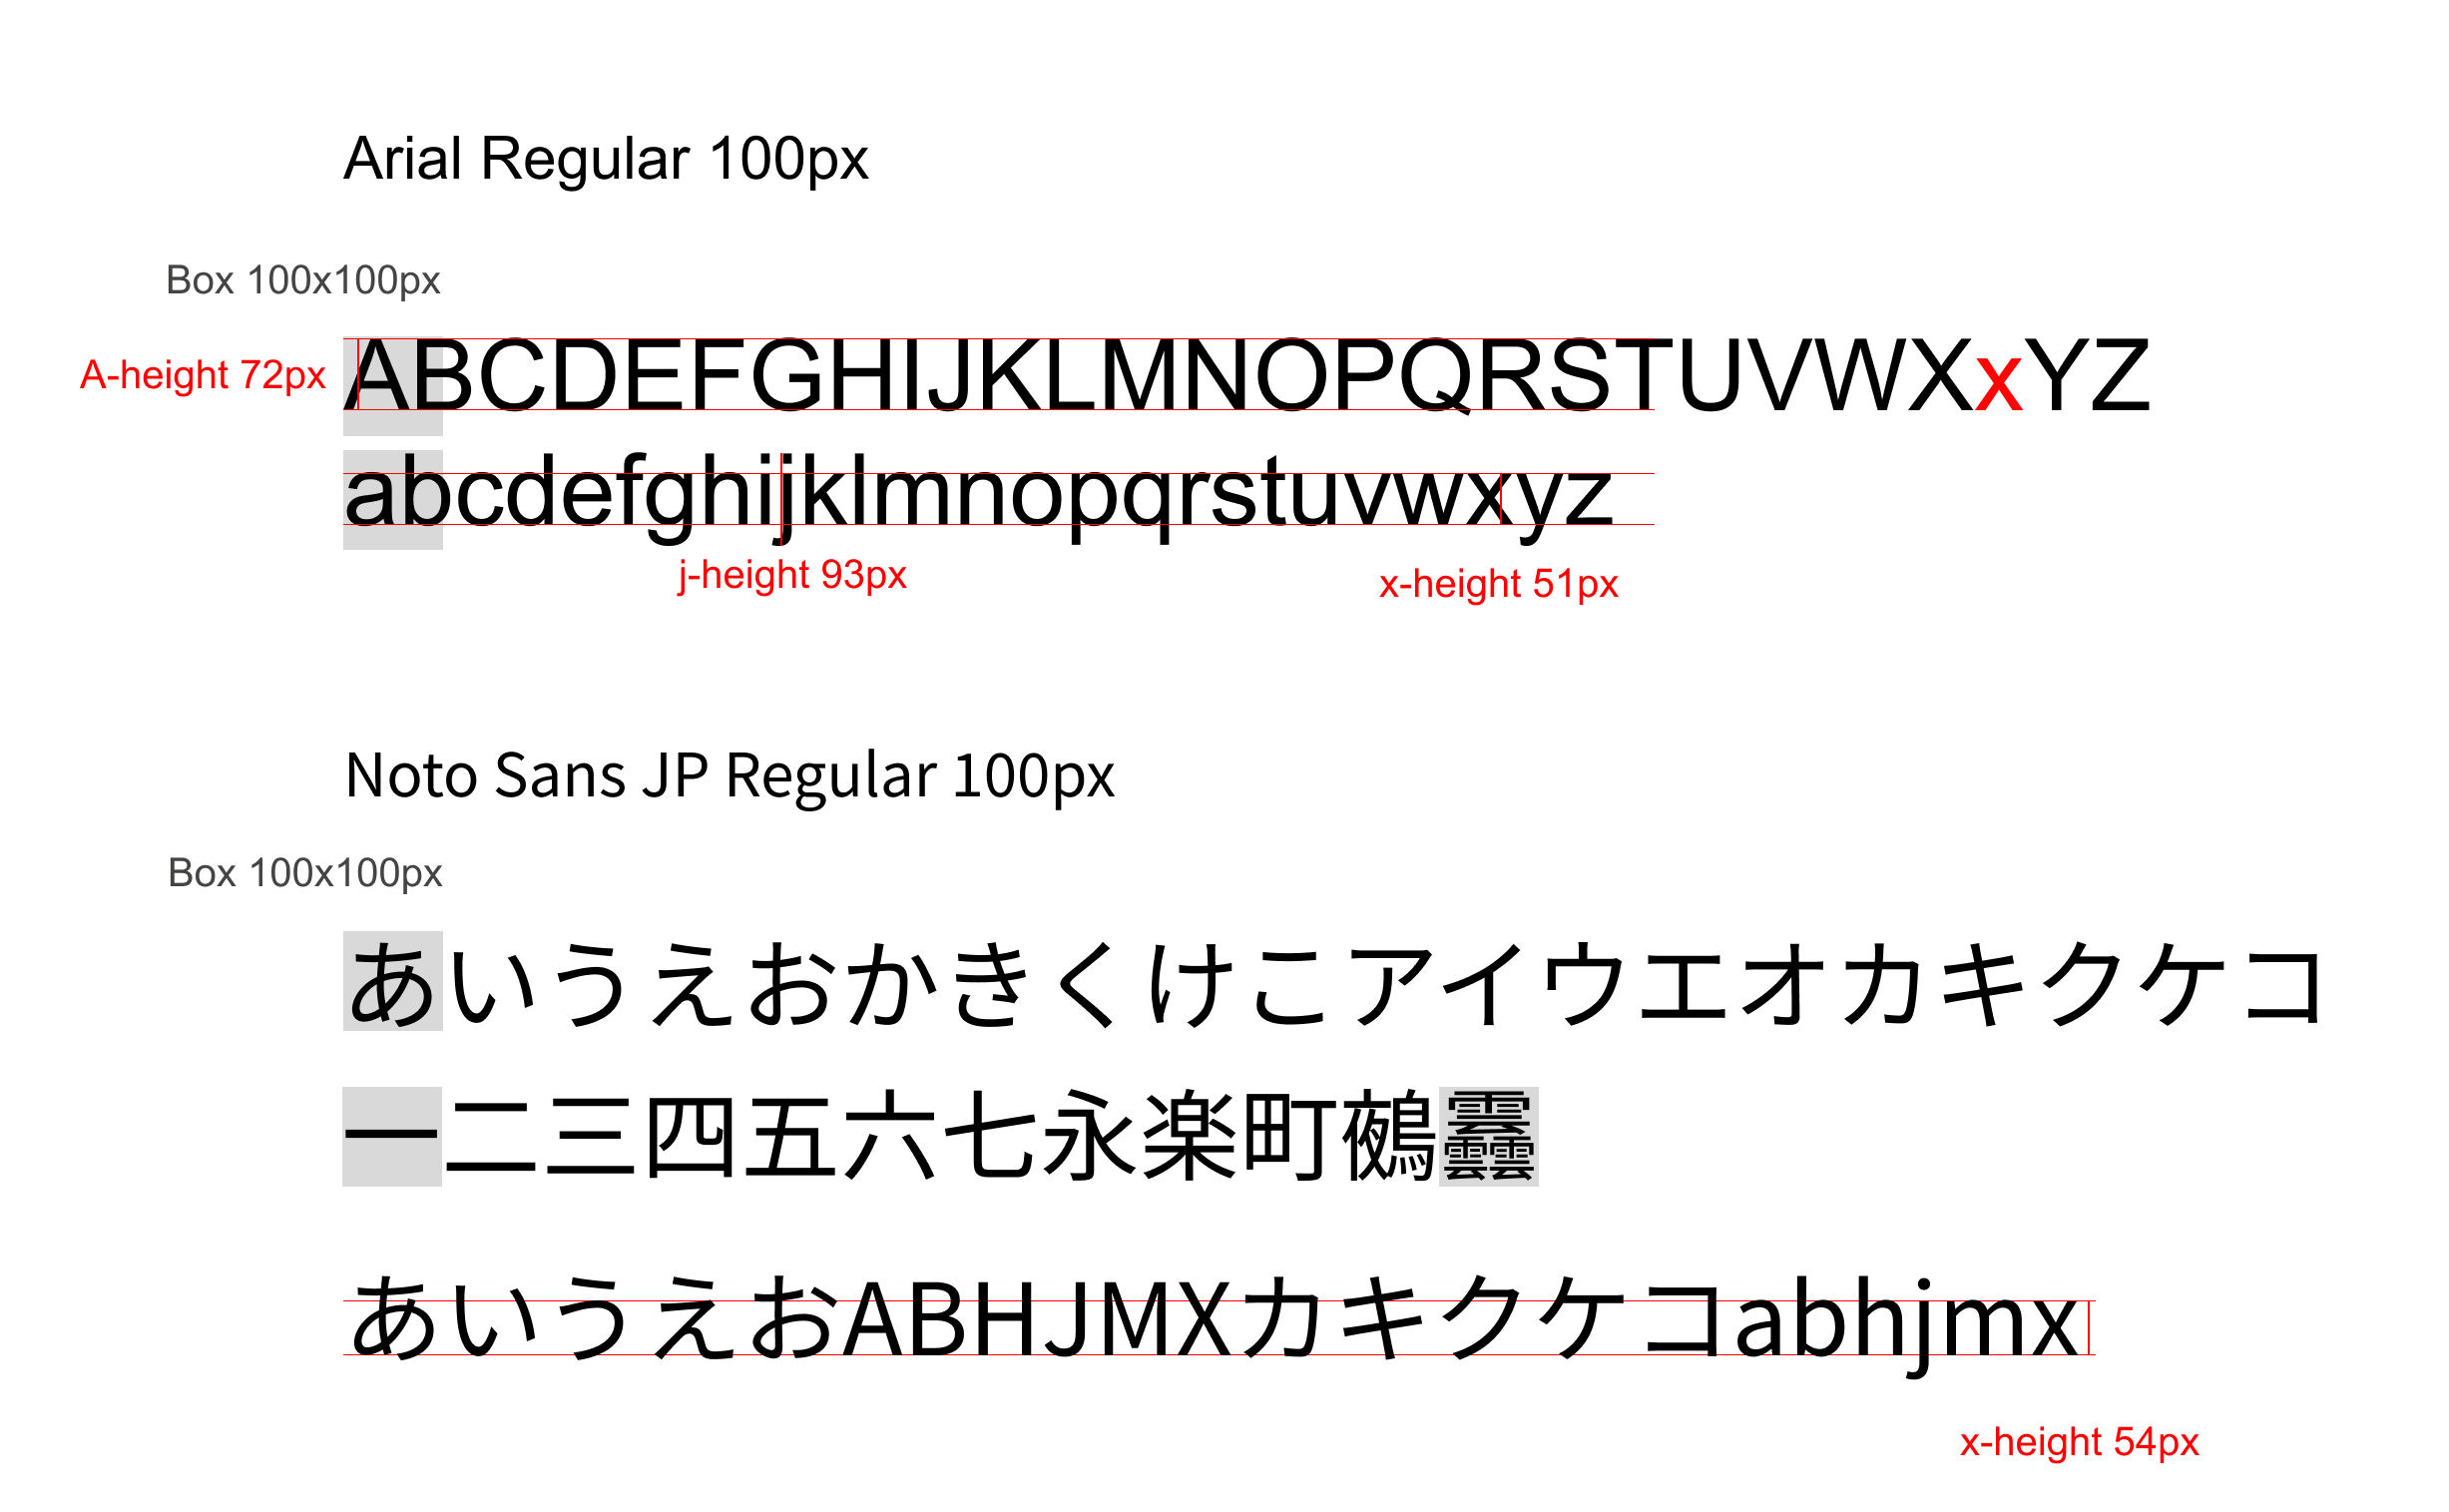 Arial Regular（100px）とNoto Sans JP Regular（100px）のフォントの文字の高さを示している。